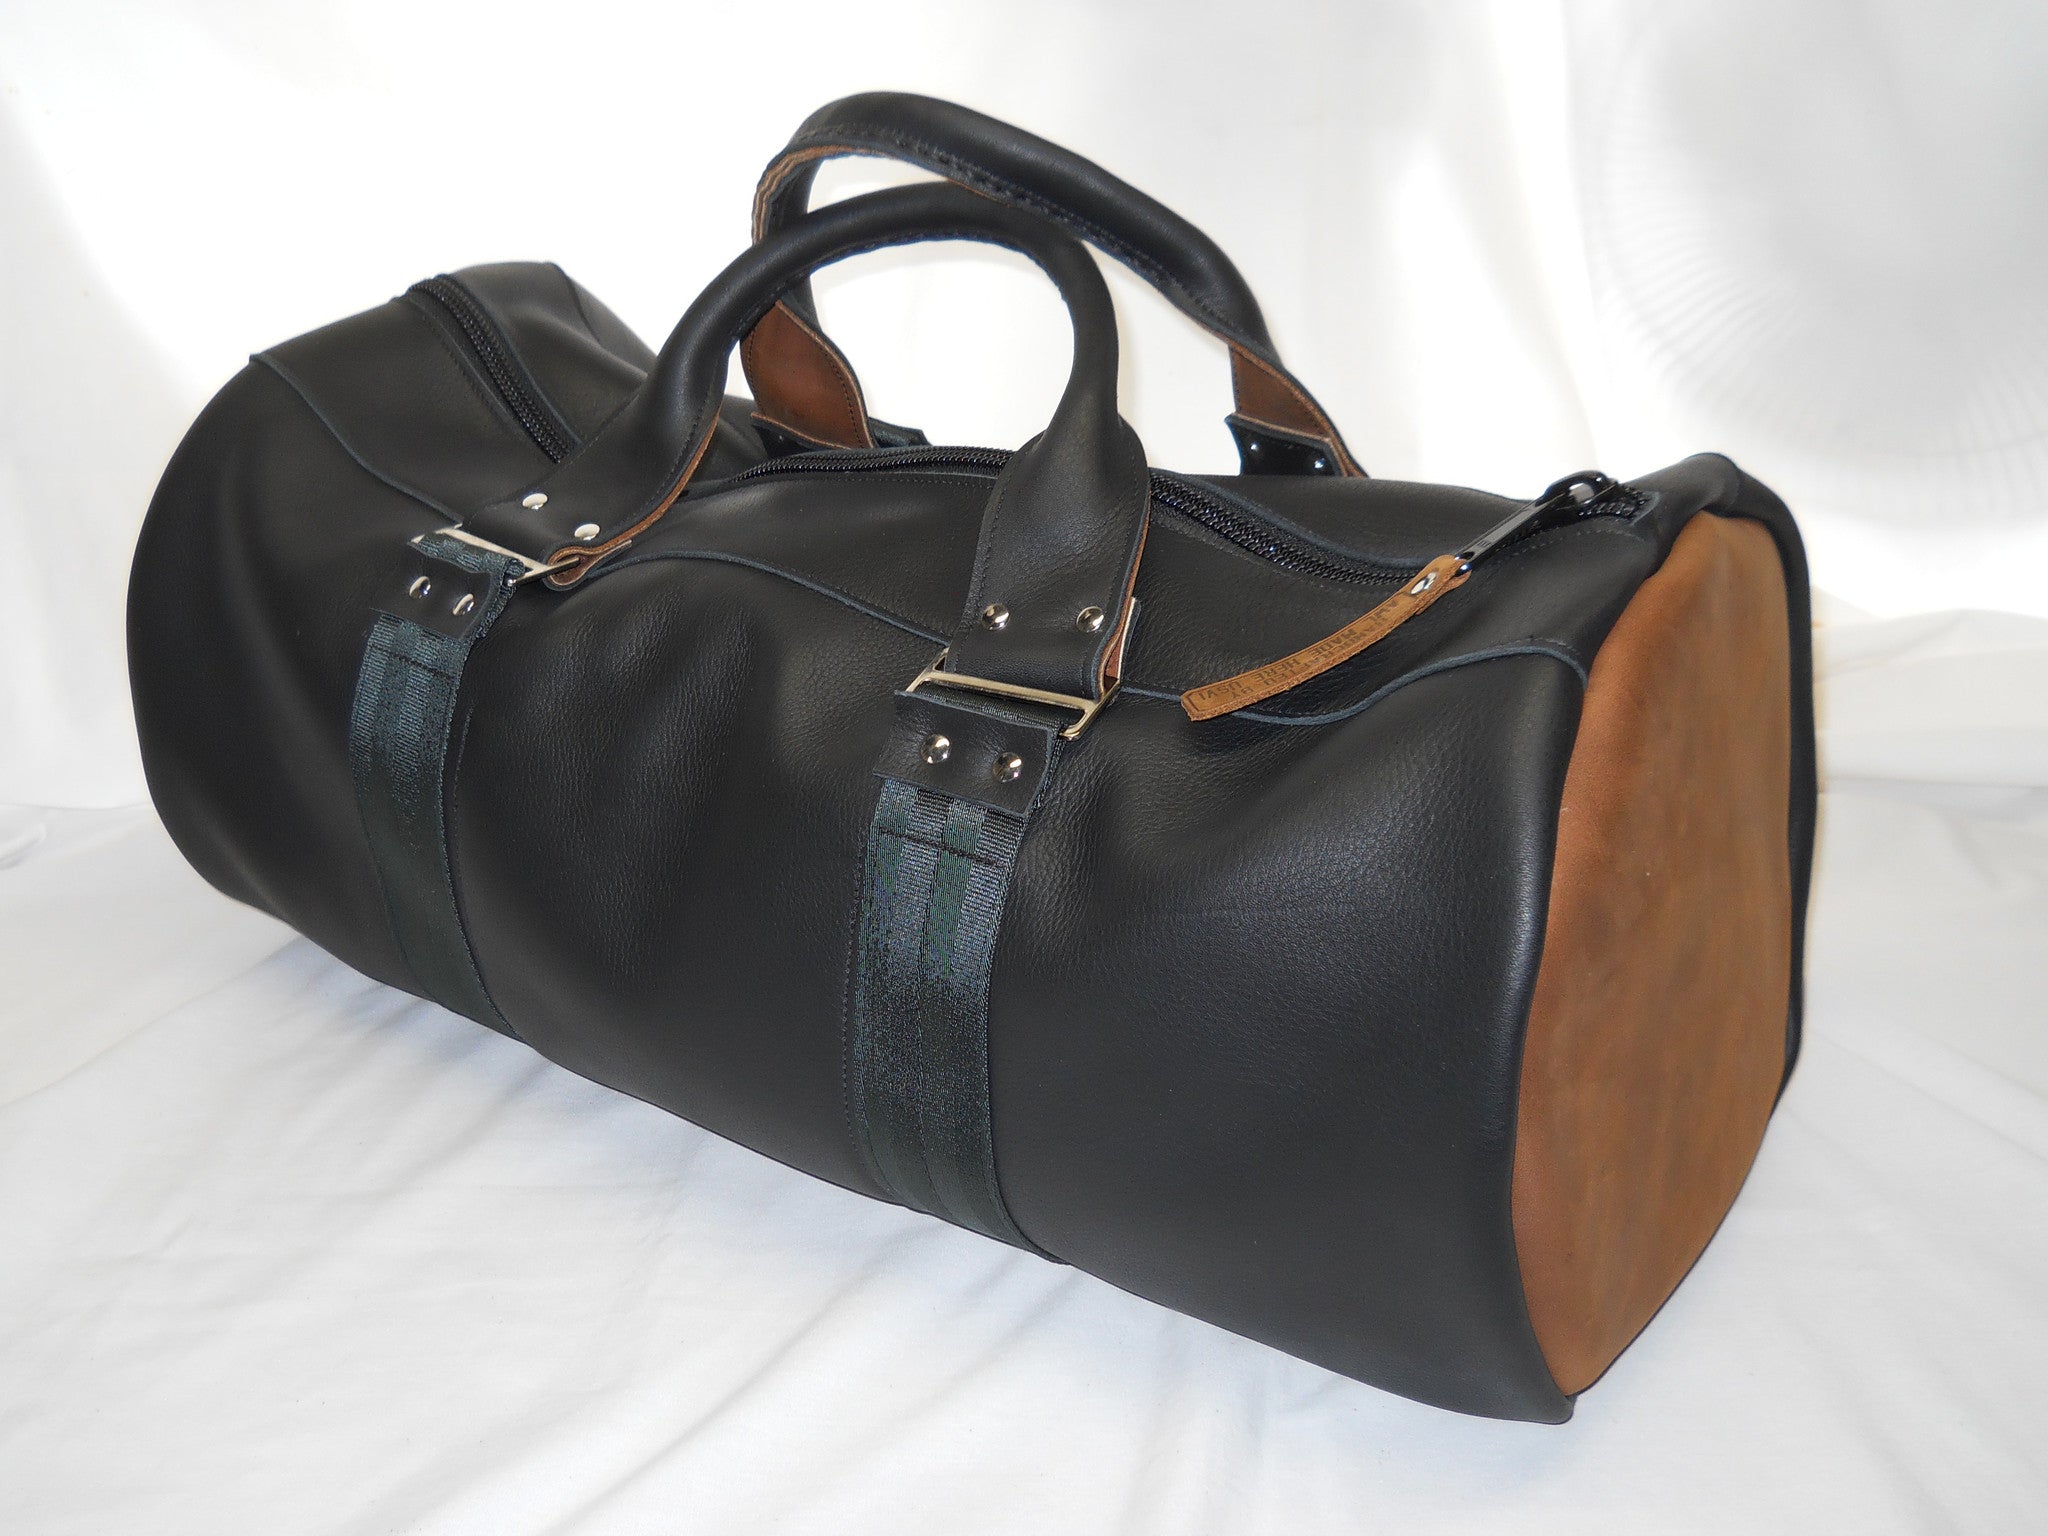 Ox's Travel Bag